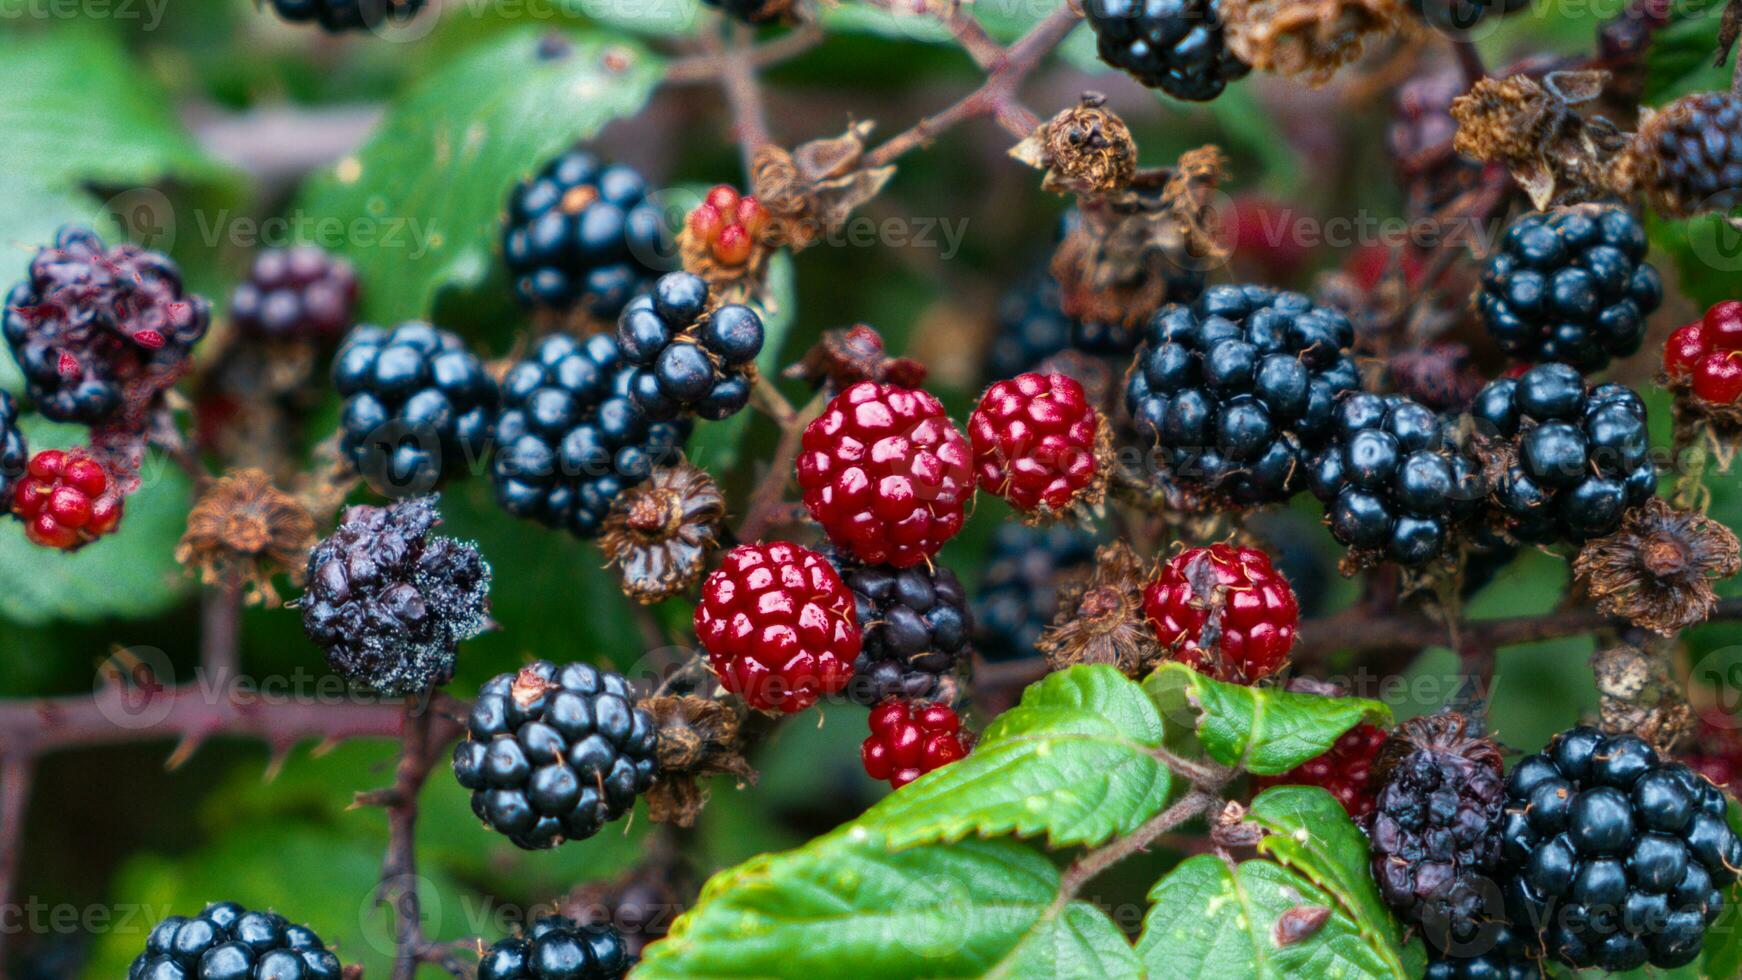 Ripe Blackberries on a Bramble Bush photo